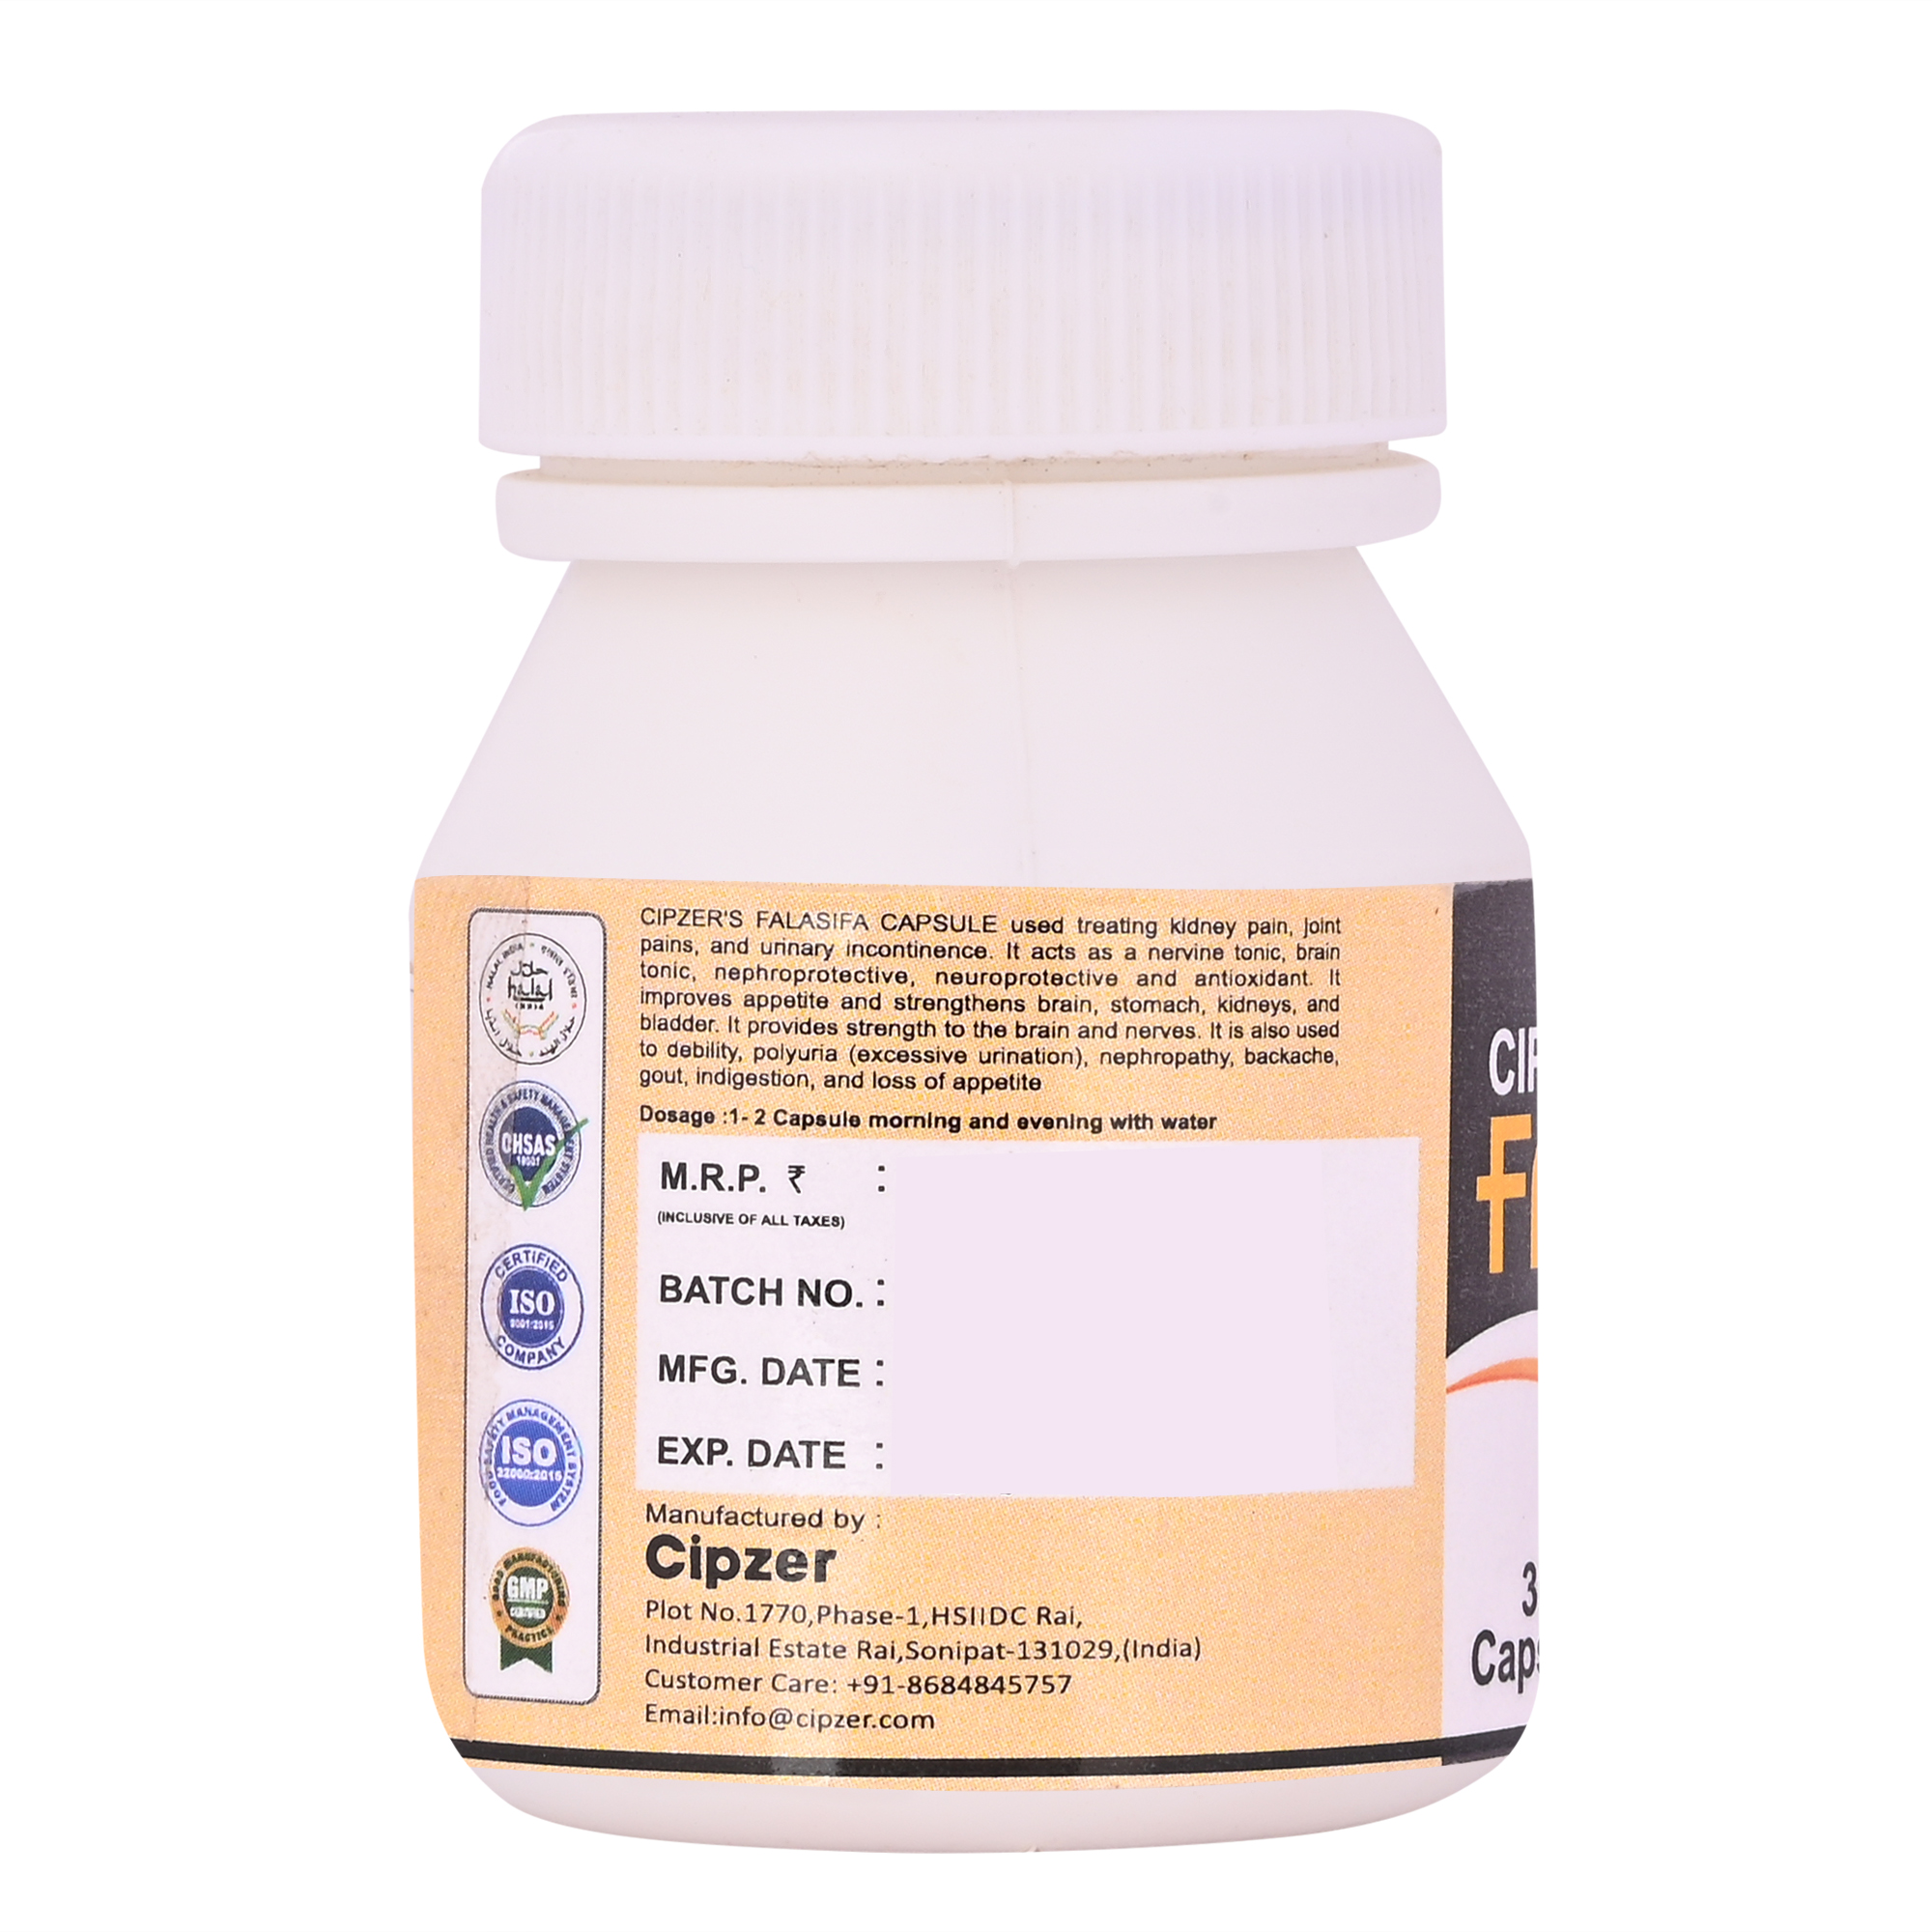 Buy Cipzer Falasifa Capsule at Best Price Online